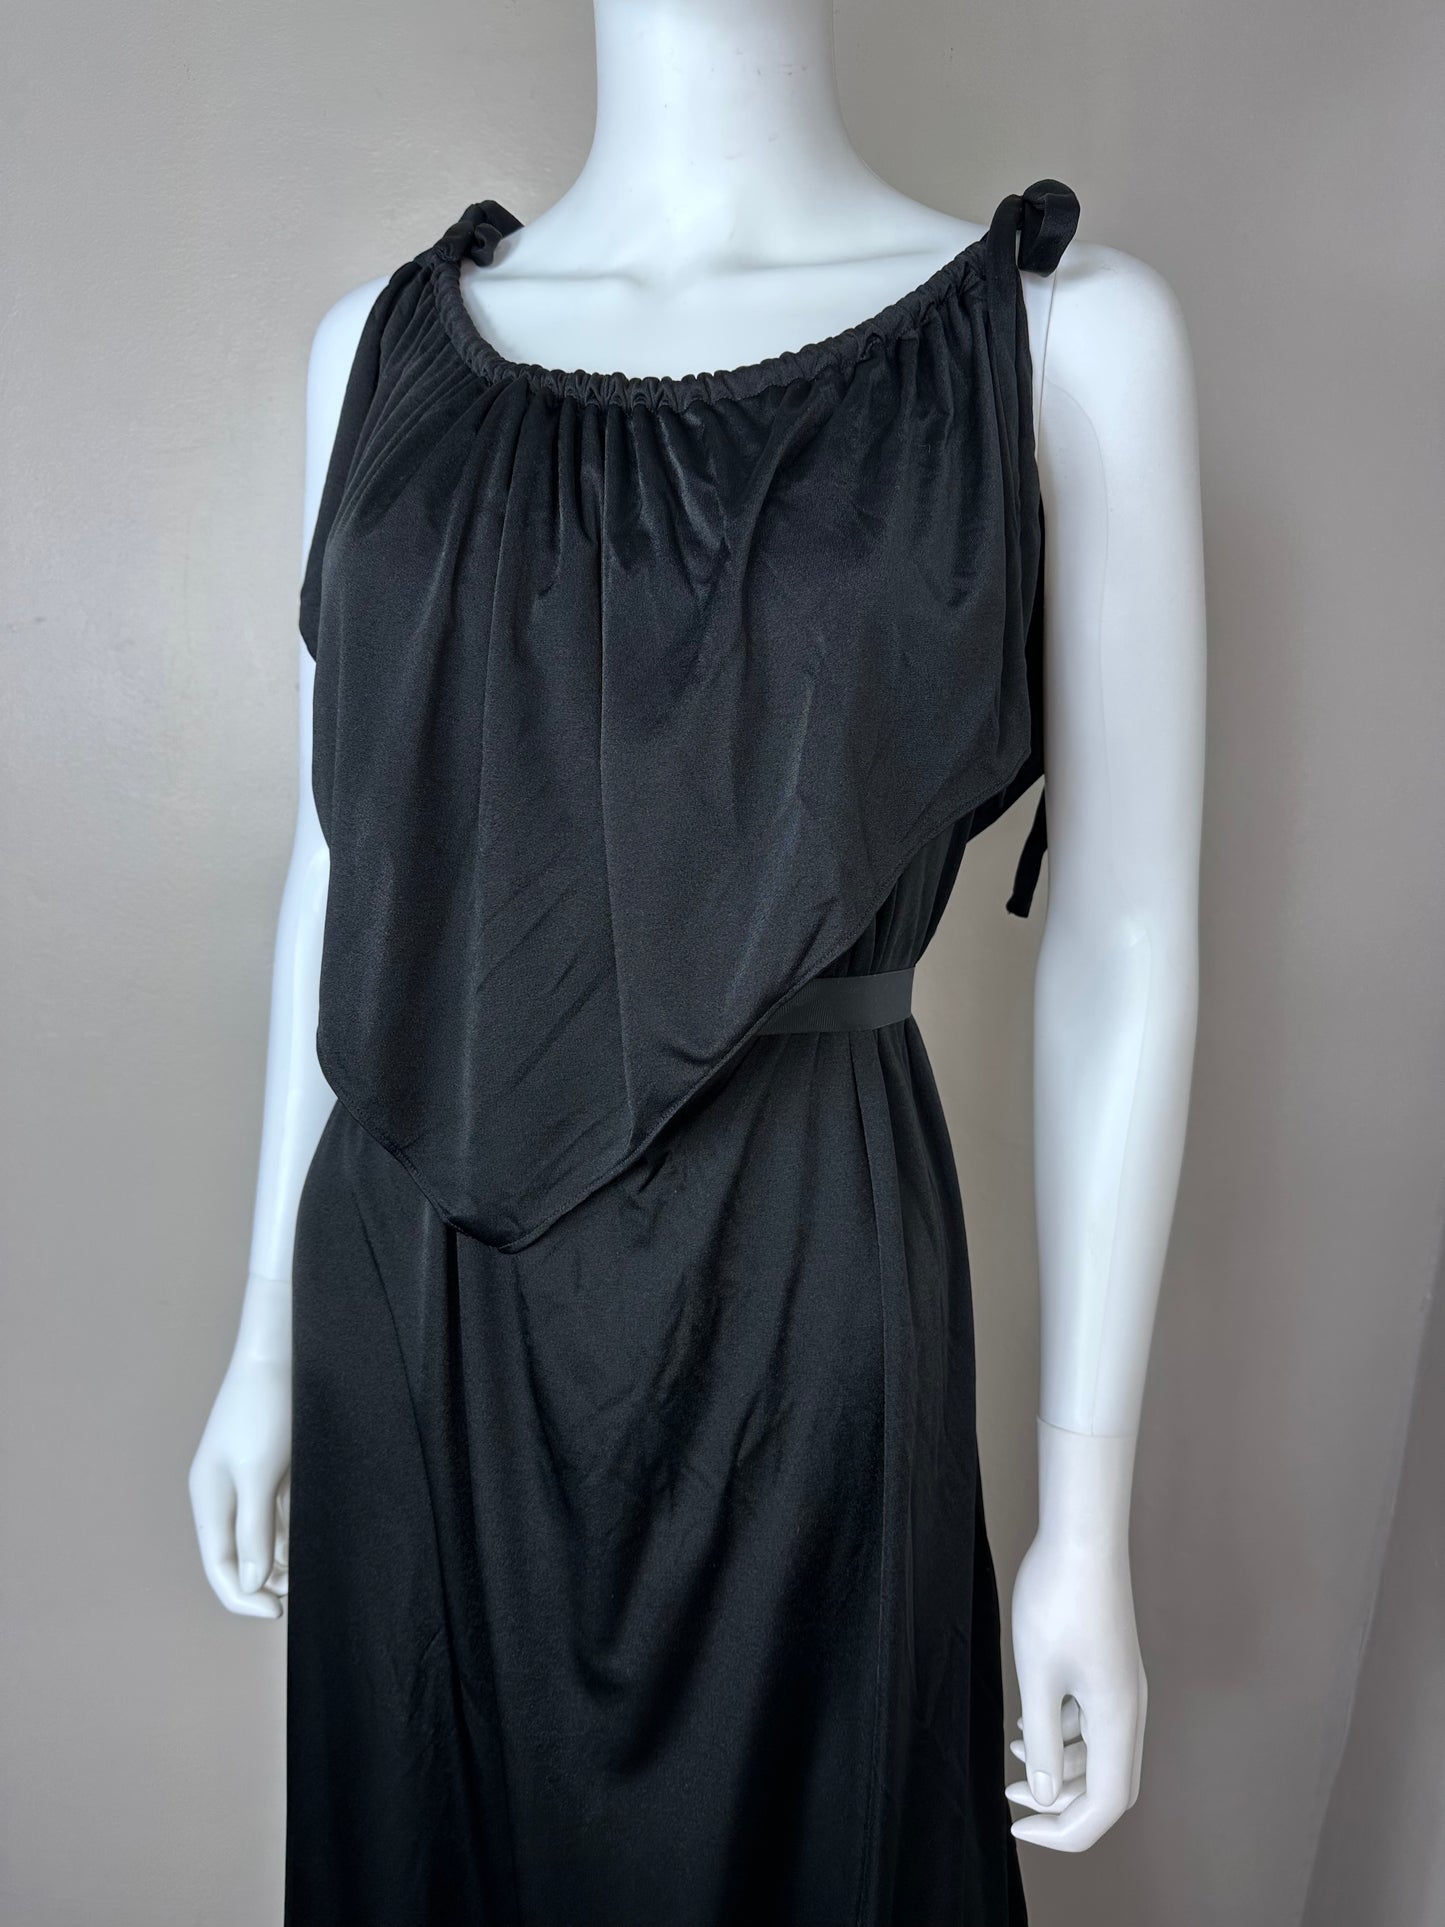 1970s Grecian Inspired Black Maxi Dress, Size 3X